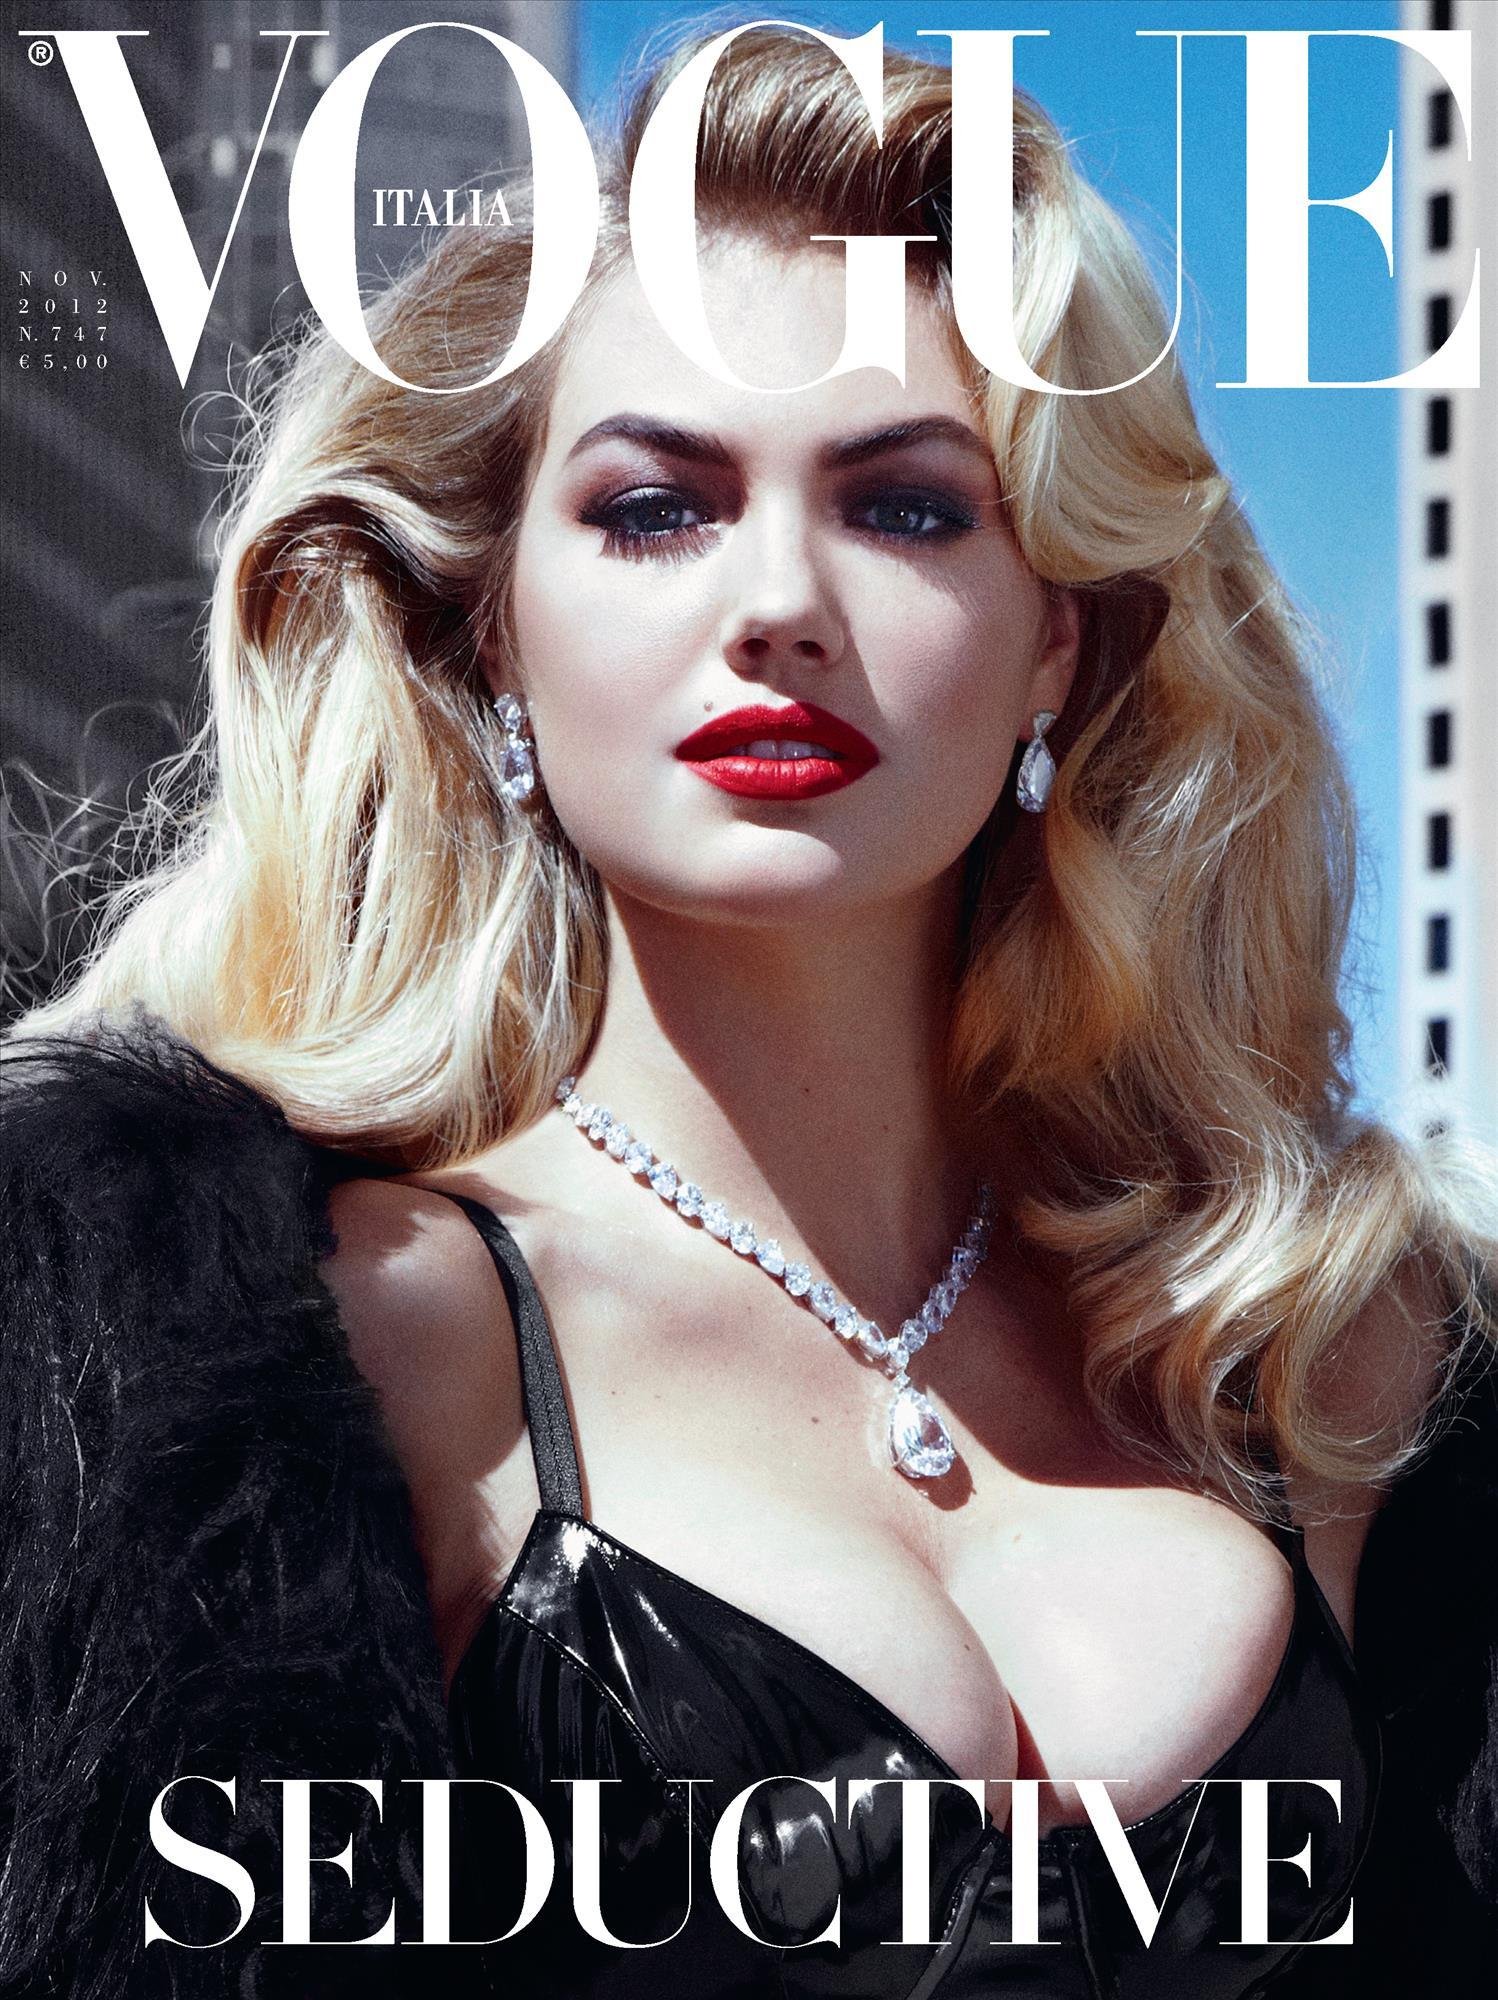 Kate-Upton-by-Steven-Meisel-Vogue-Italia-November-2012-00004.jpeg